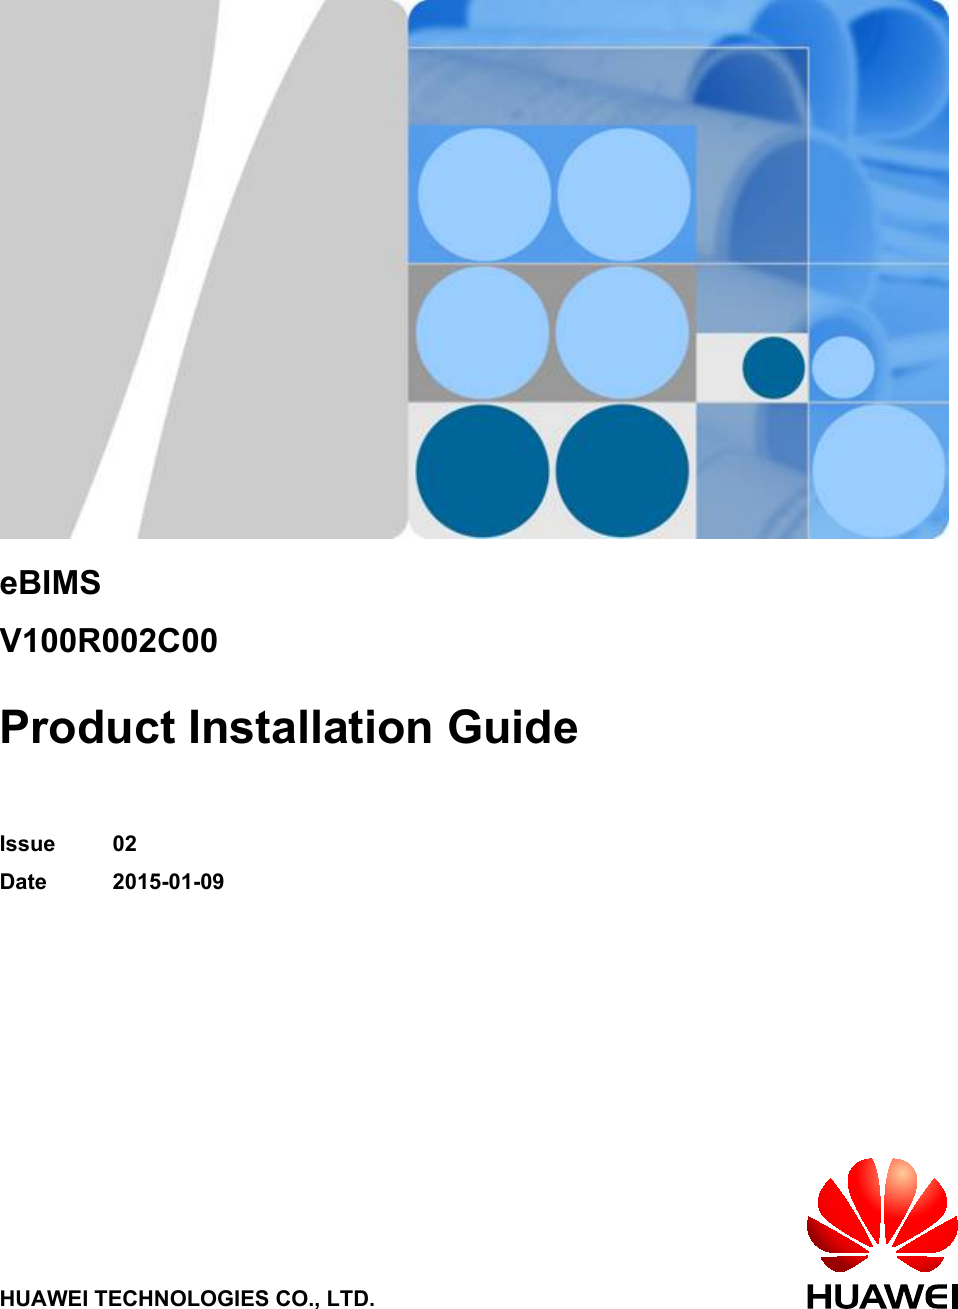 eBIMSV100R002C00Product Installation GuideIssue 02Date 2015-01-09HUAWEI TECHNOLOGIES CO., LTD.